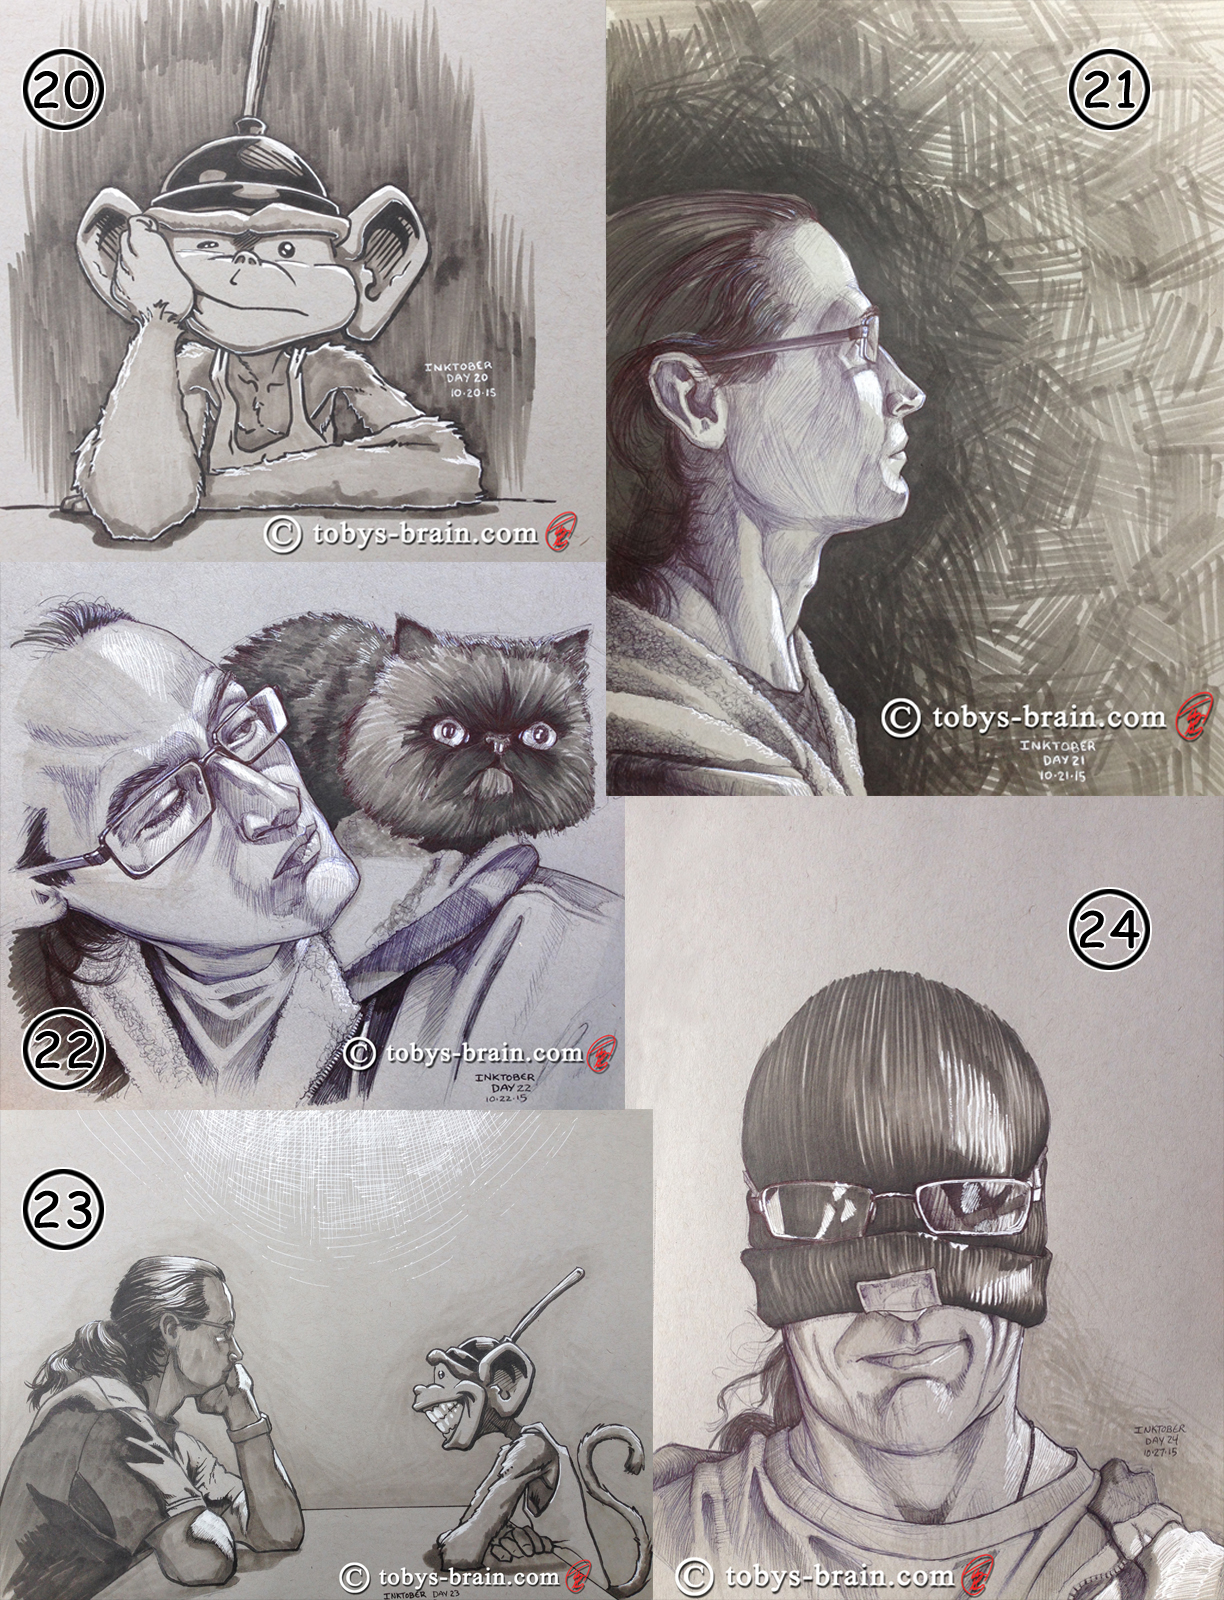 ink self-portrait series for October/Inktober 2015